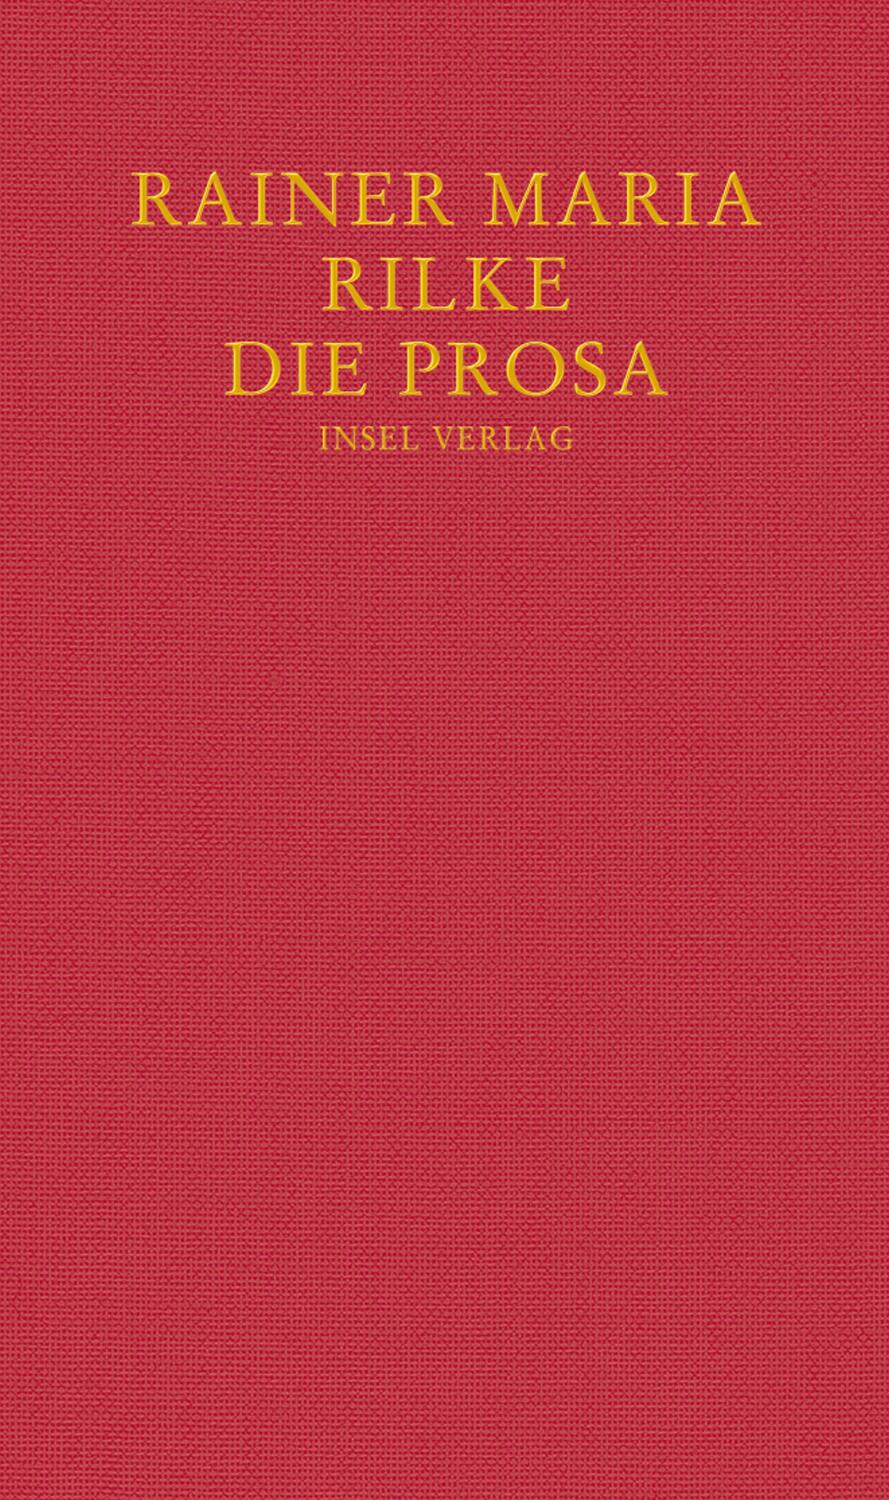 Die Prosa - Rilke, Rainer Maria